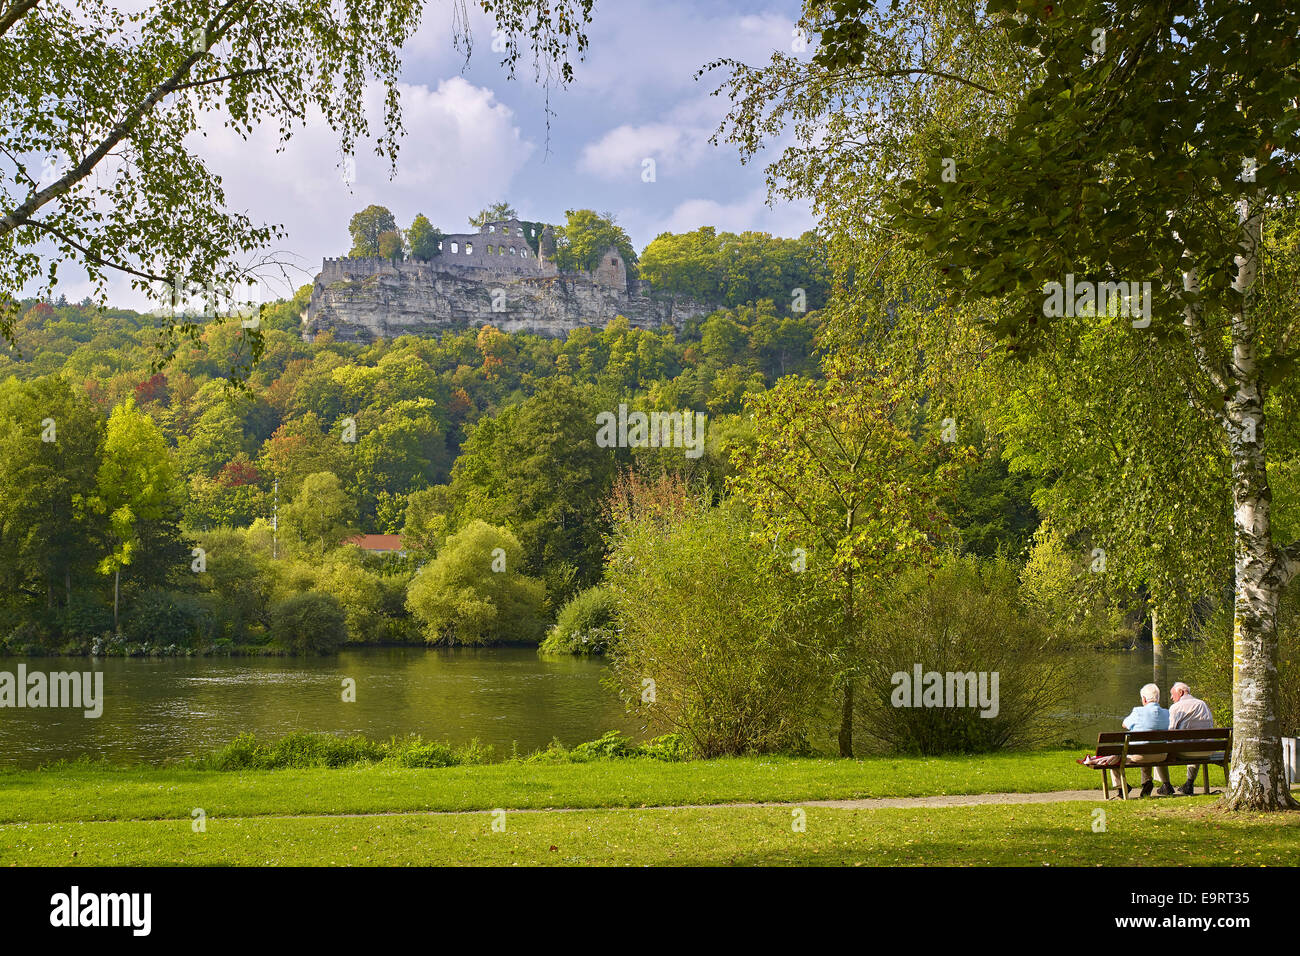 Karlsburg castle at banks of the Main River, Karlstadt, Germany Stock Photo